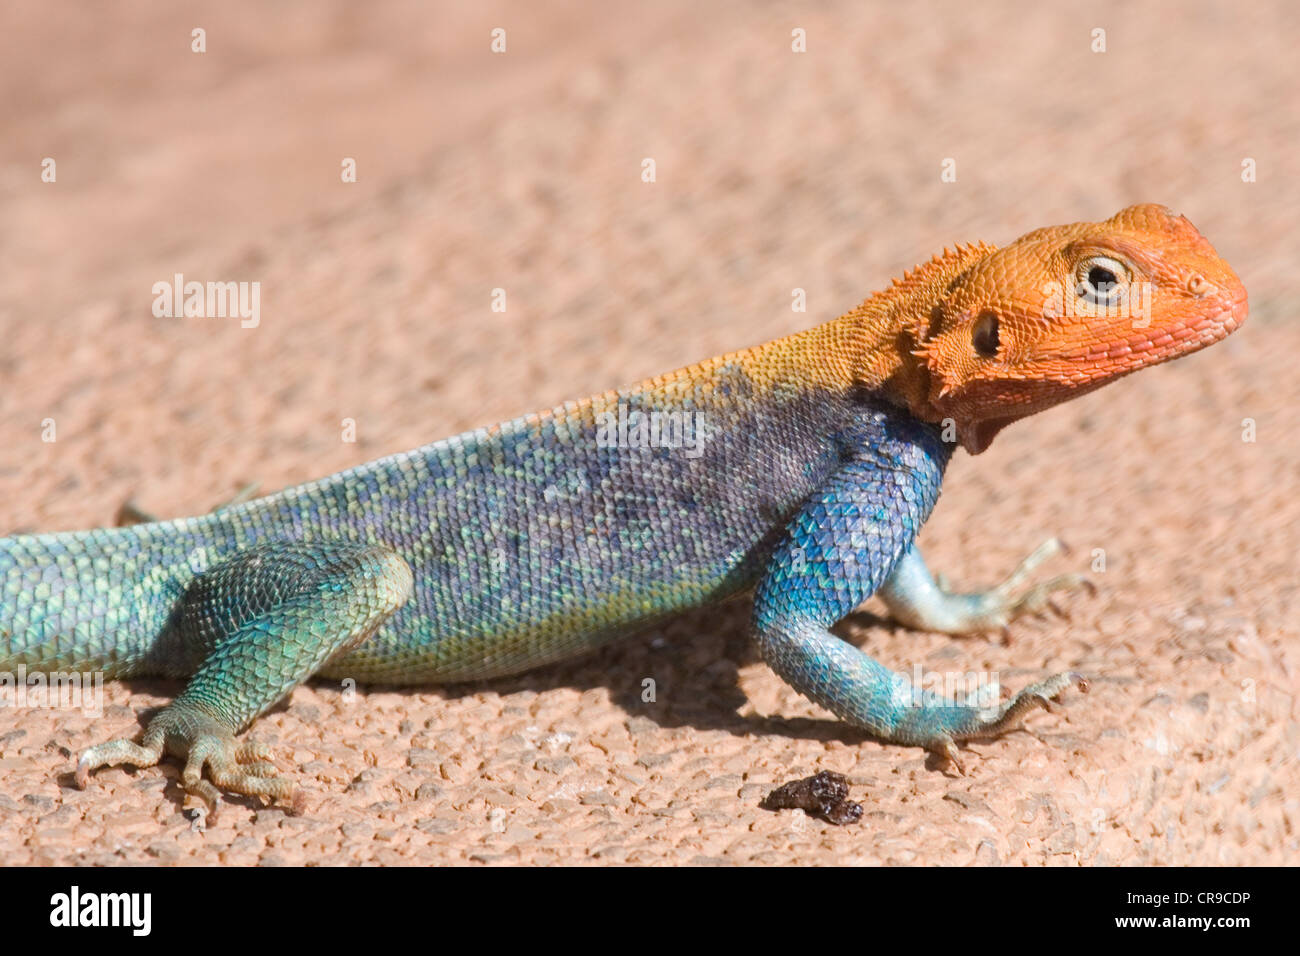 East African Rainbow Lizard Foto Stock